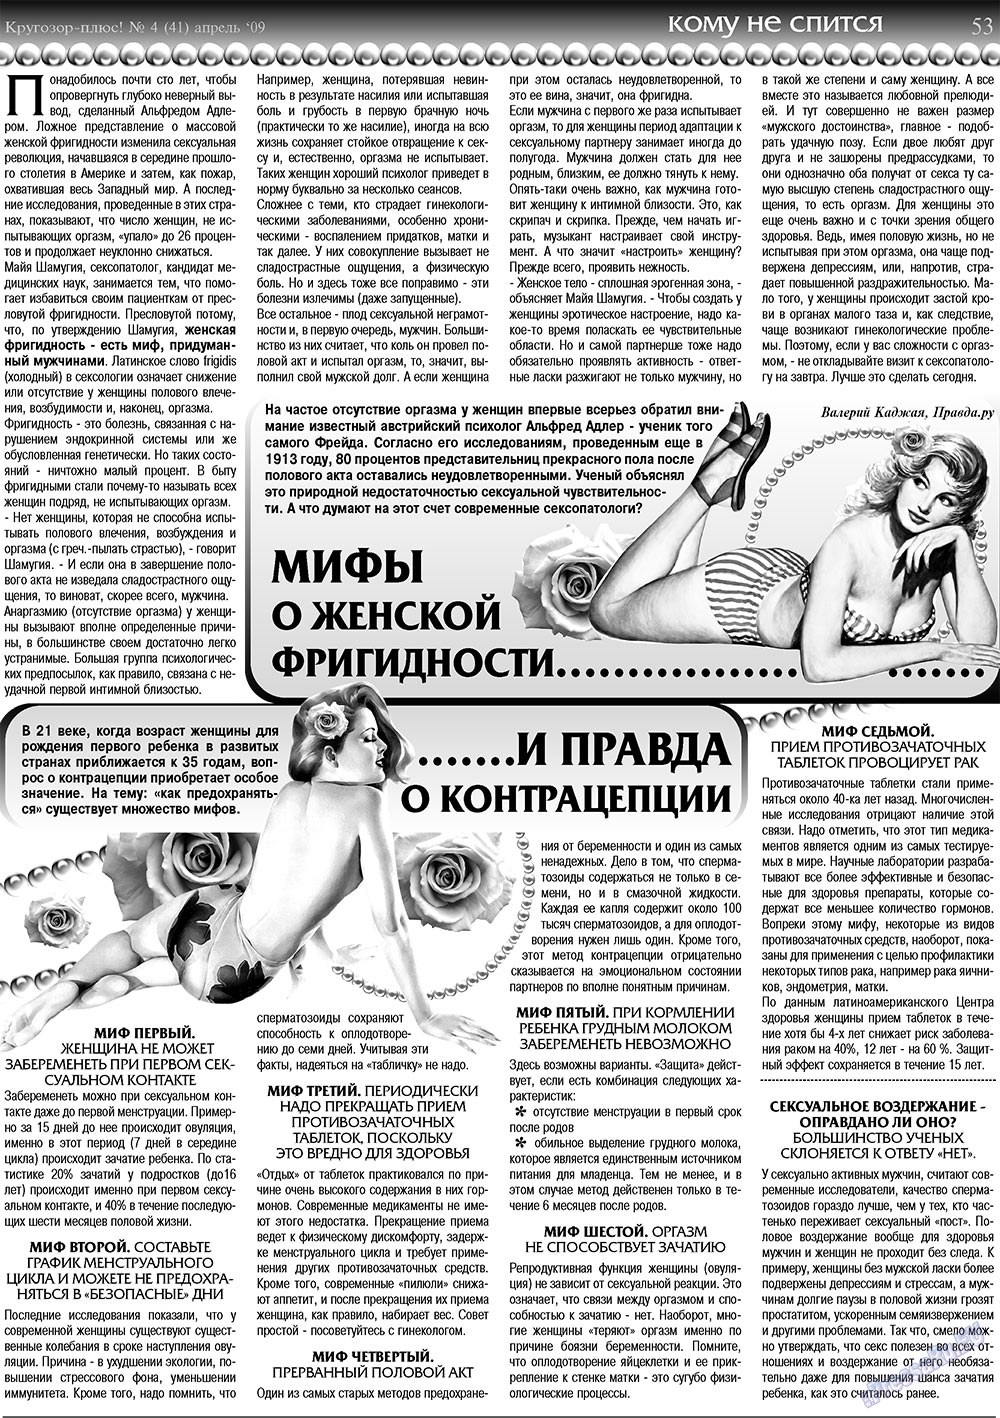 Кругозор плюс! (газета). 2009 год, номер 4, стр. 53